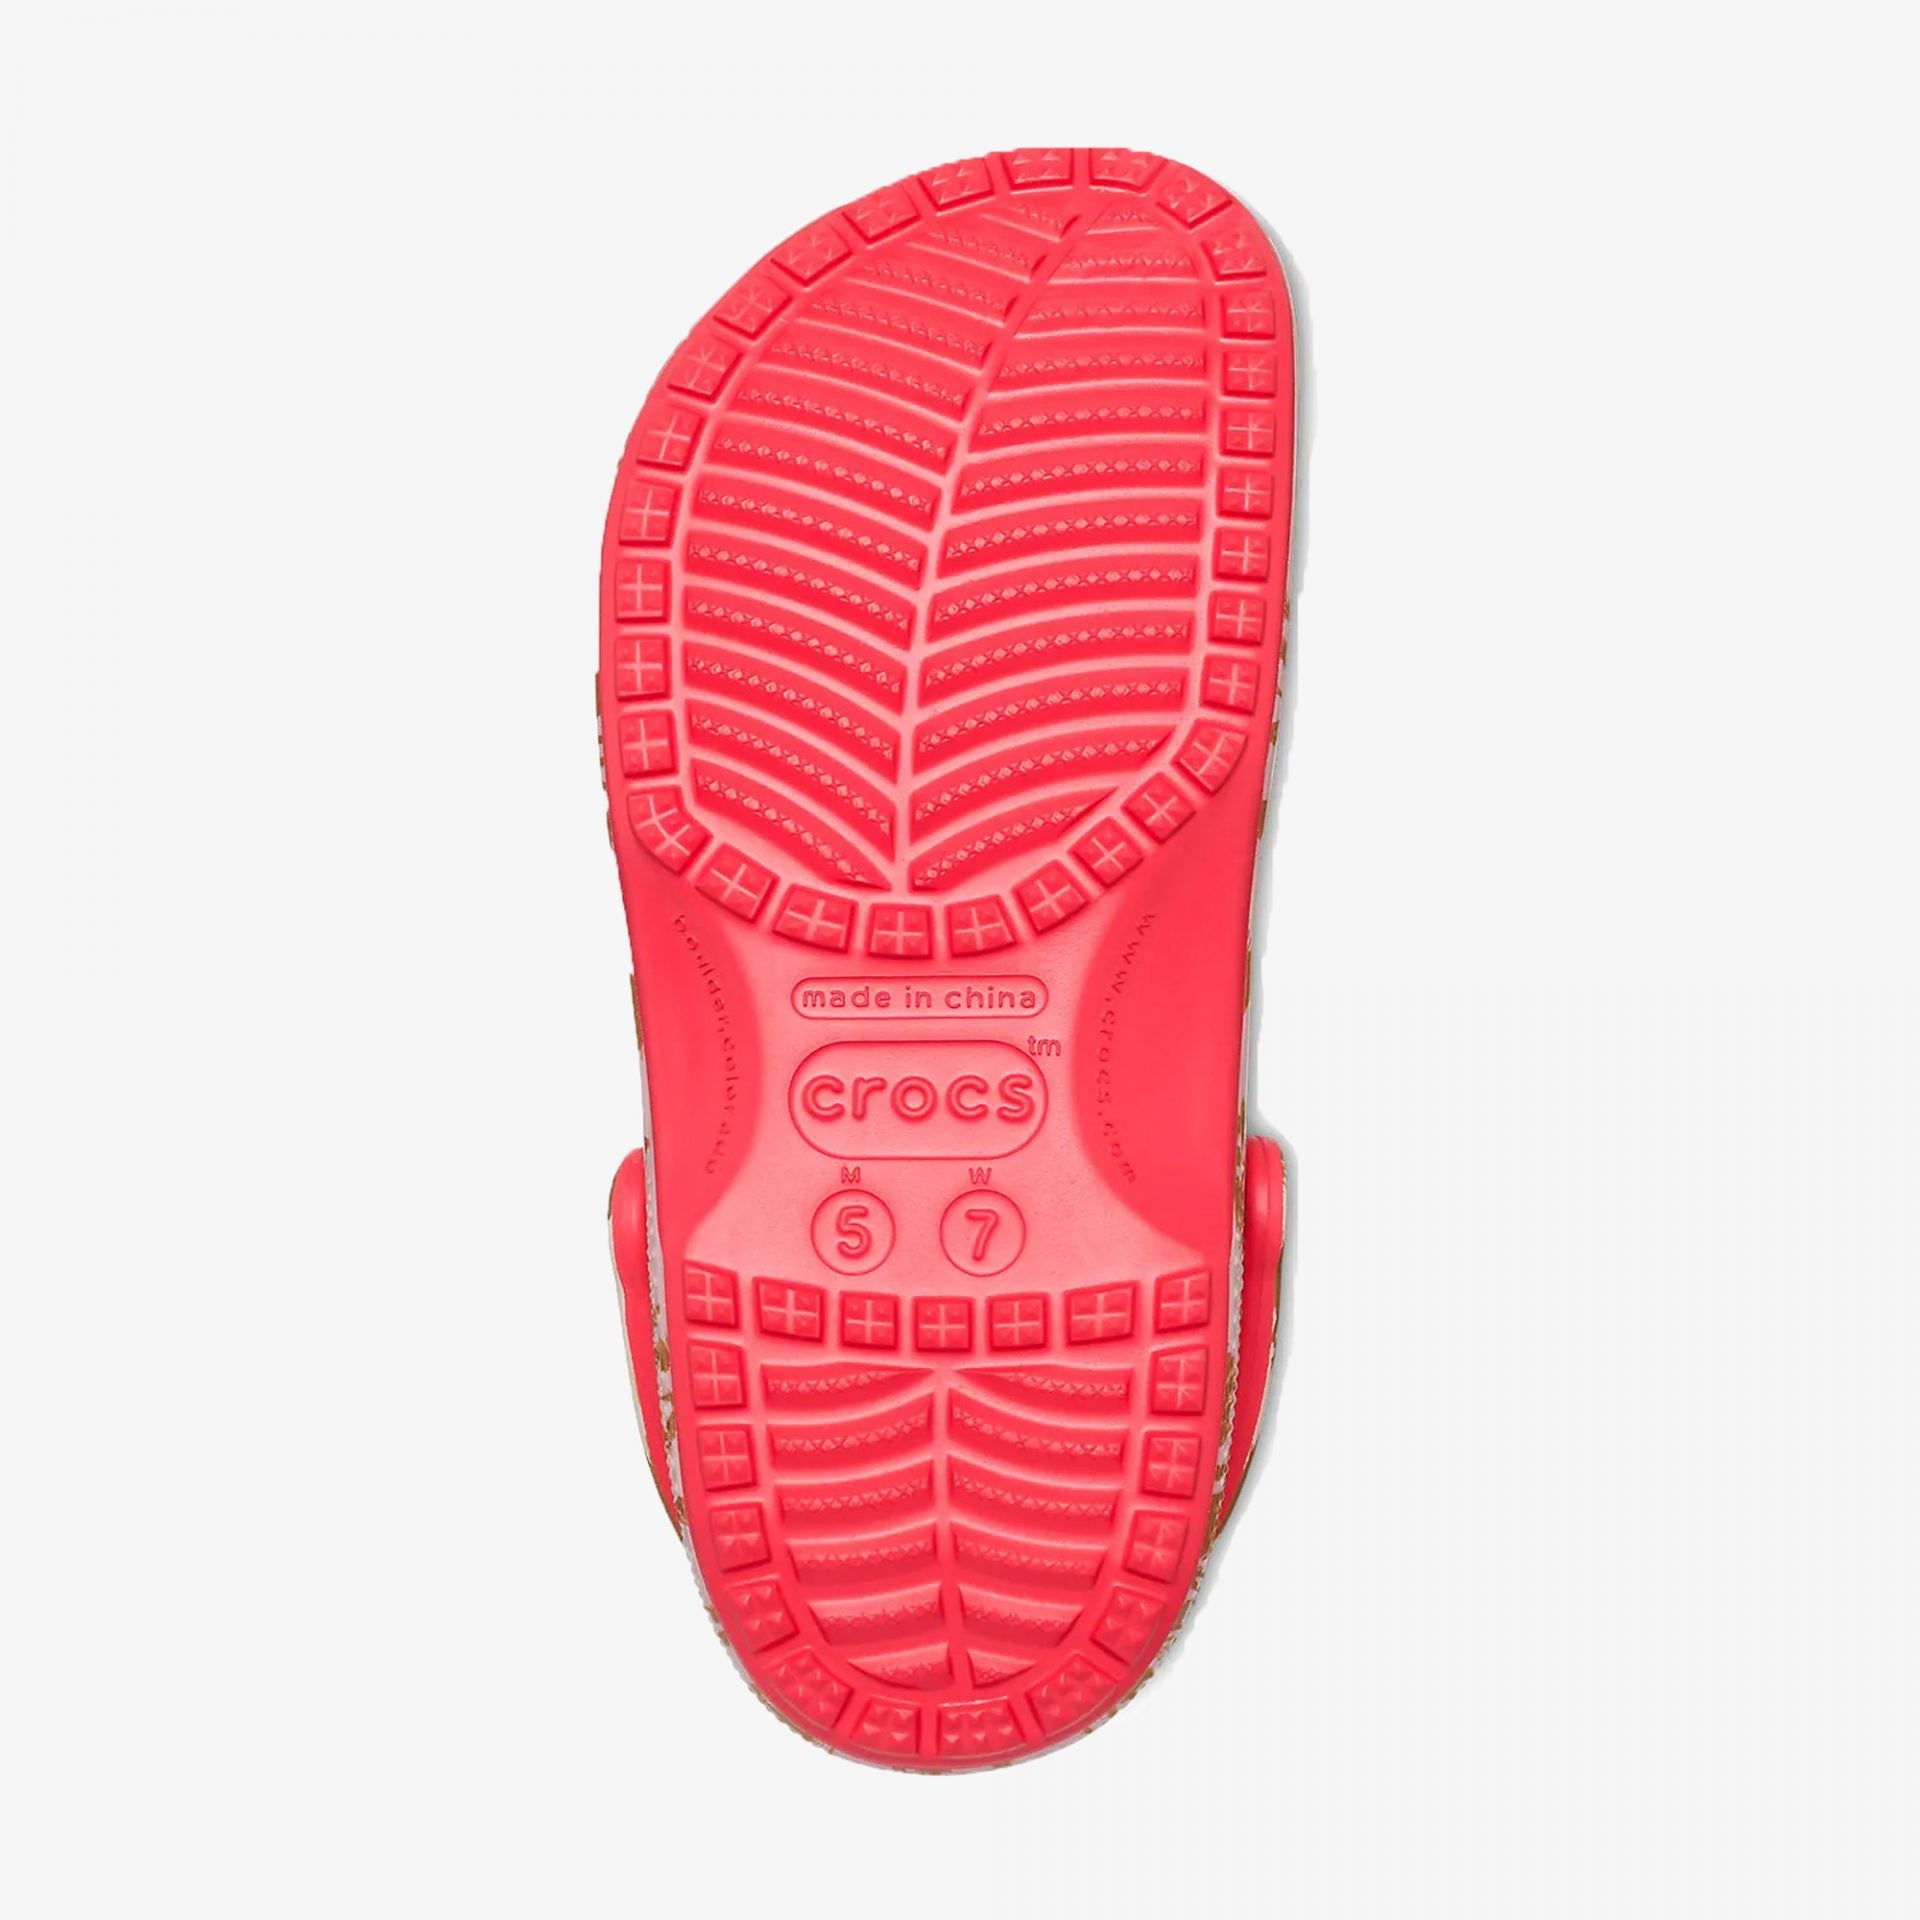 Buyr.com | Fashion Sneakers | Crocs Women's LiteRide Mesh Slip-On Shoe  Sneaker, black/white, 8 M US